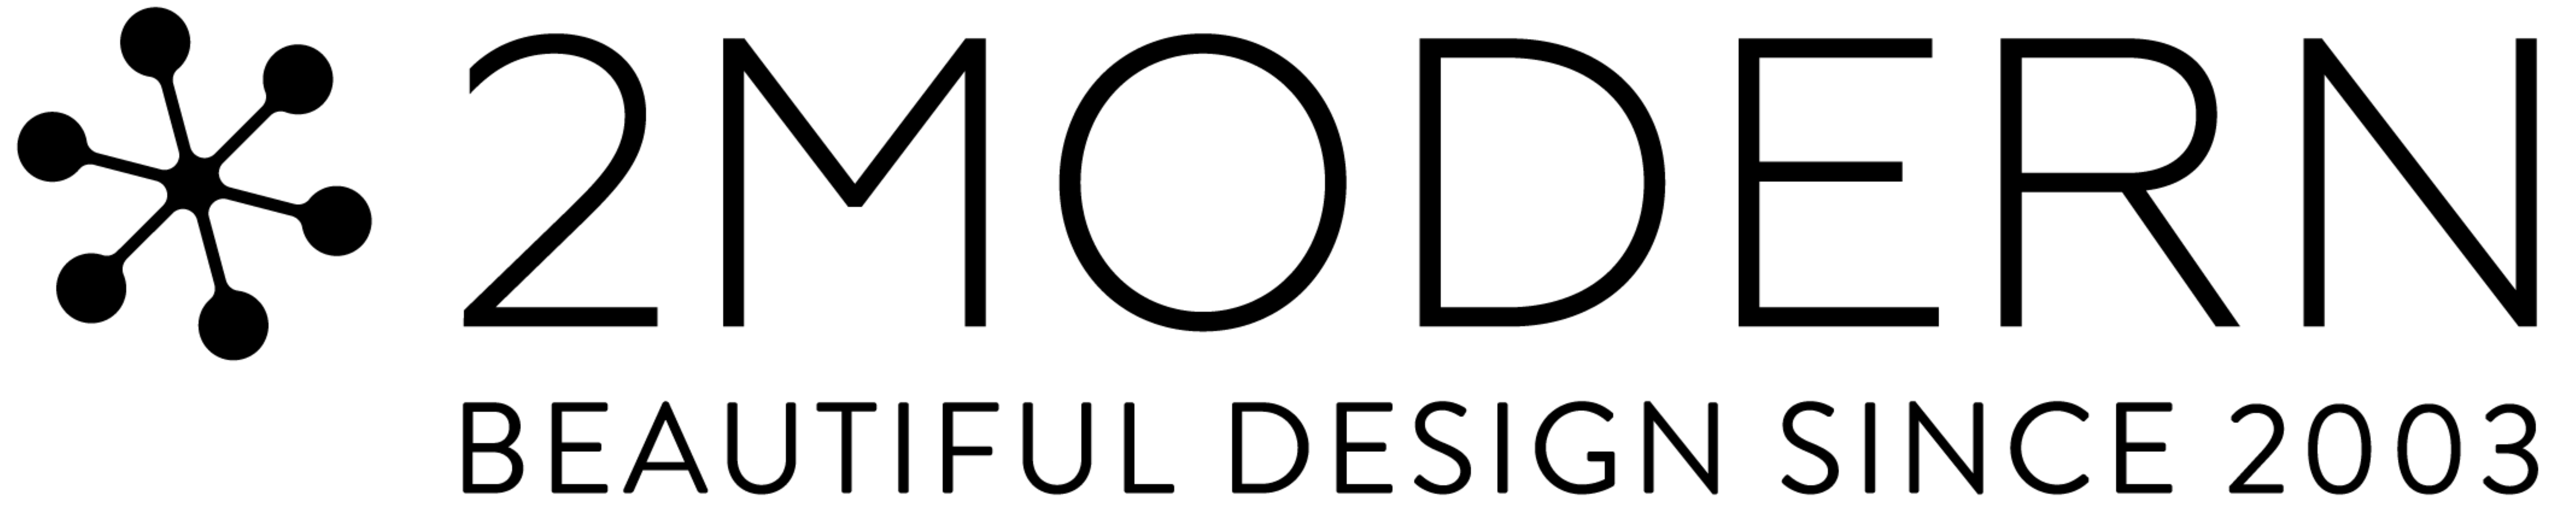 2modern logo